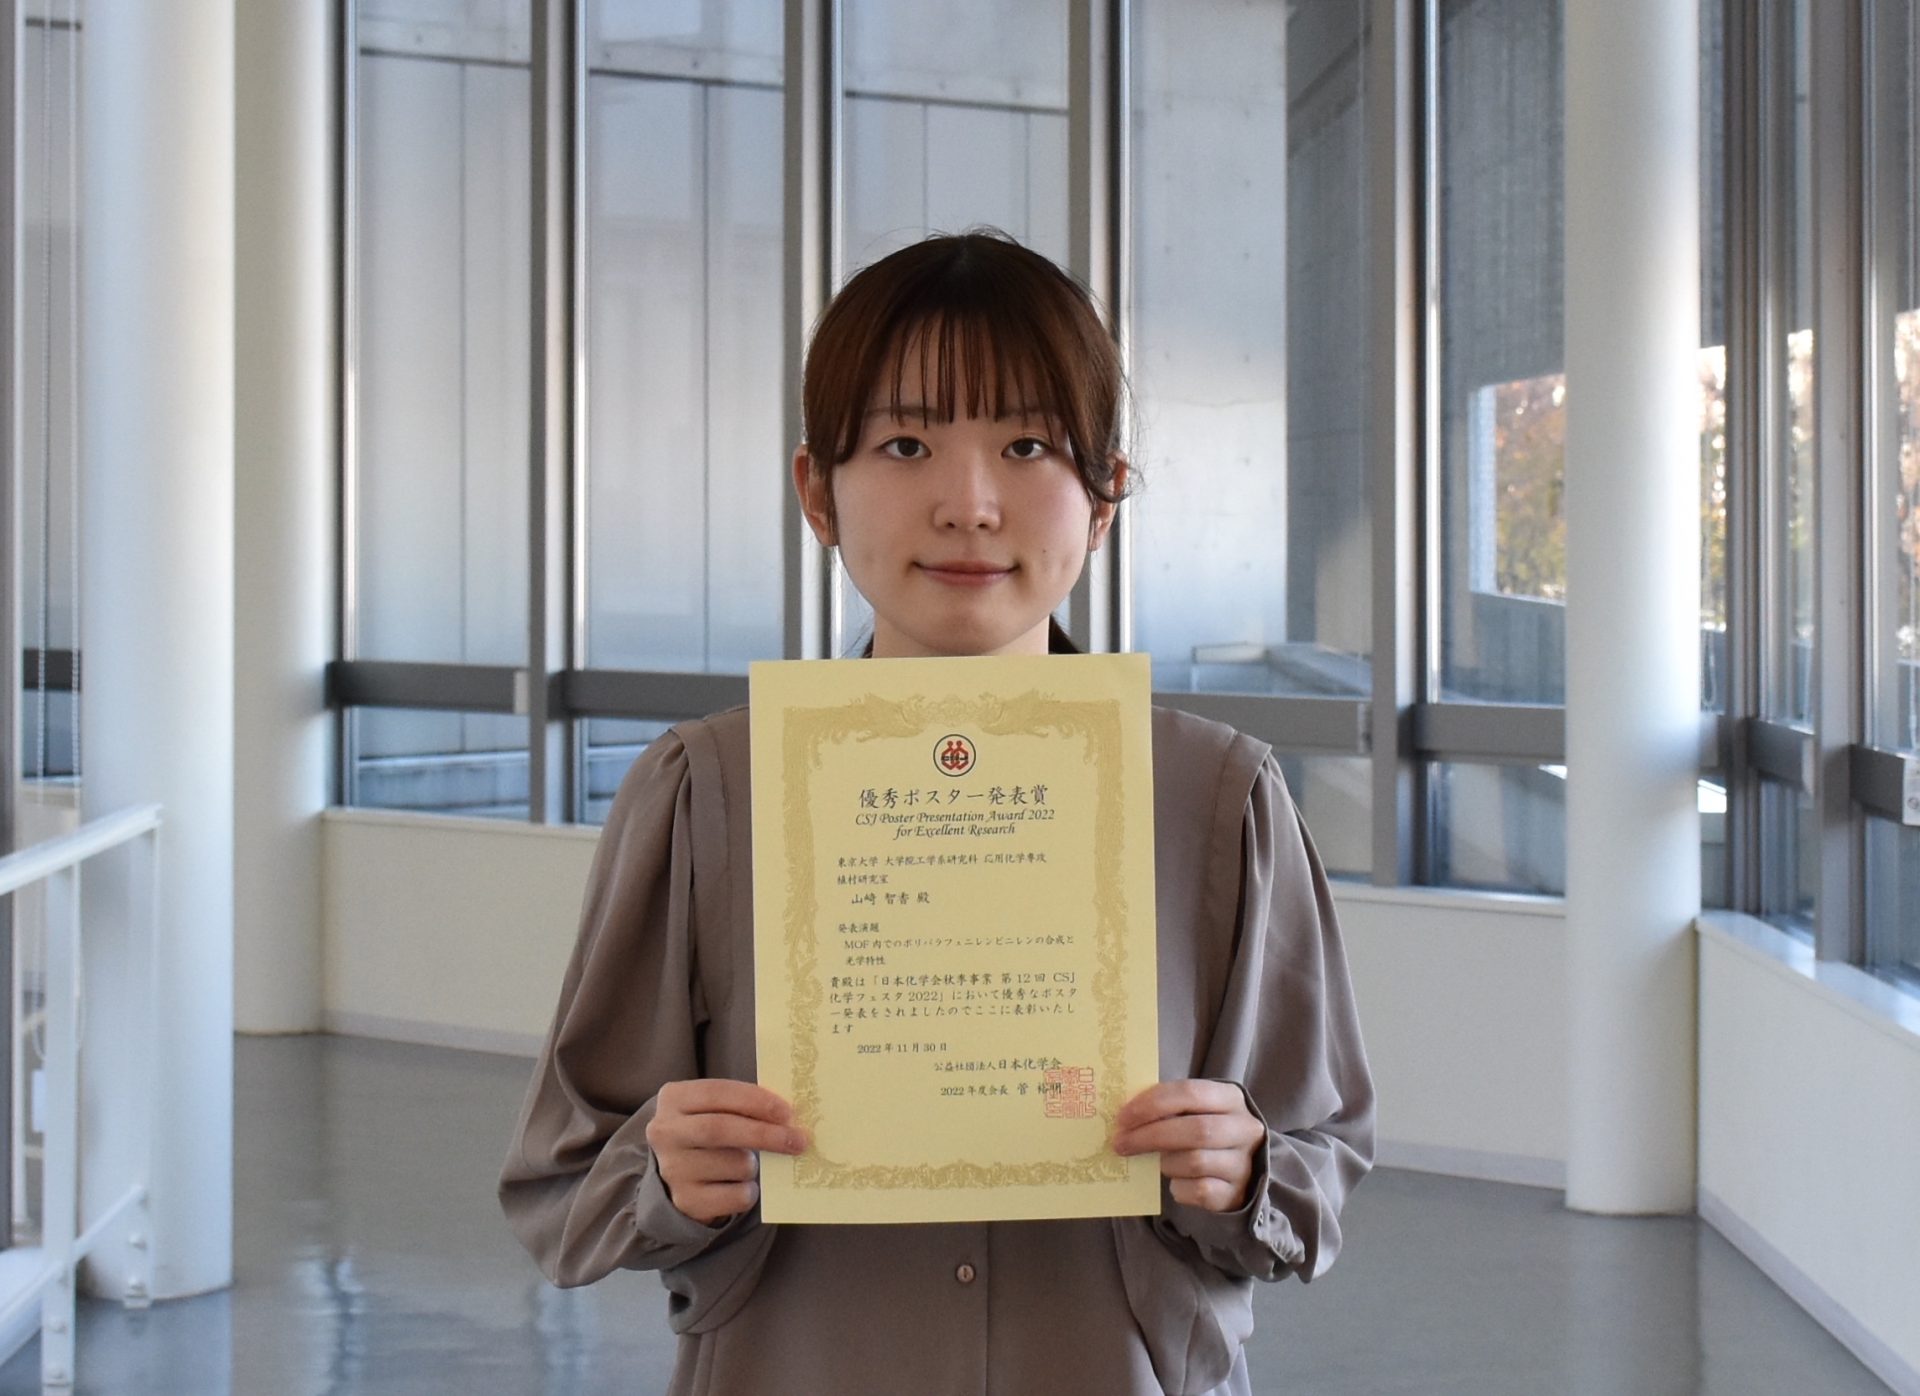 Yamasaki won the Poster Award at the 12th CSJ Chemistry Festa.